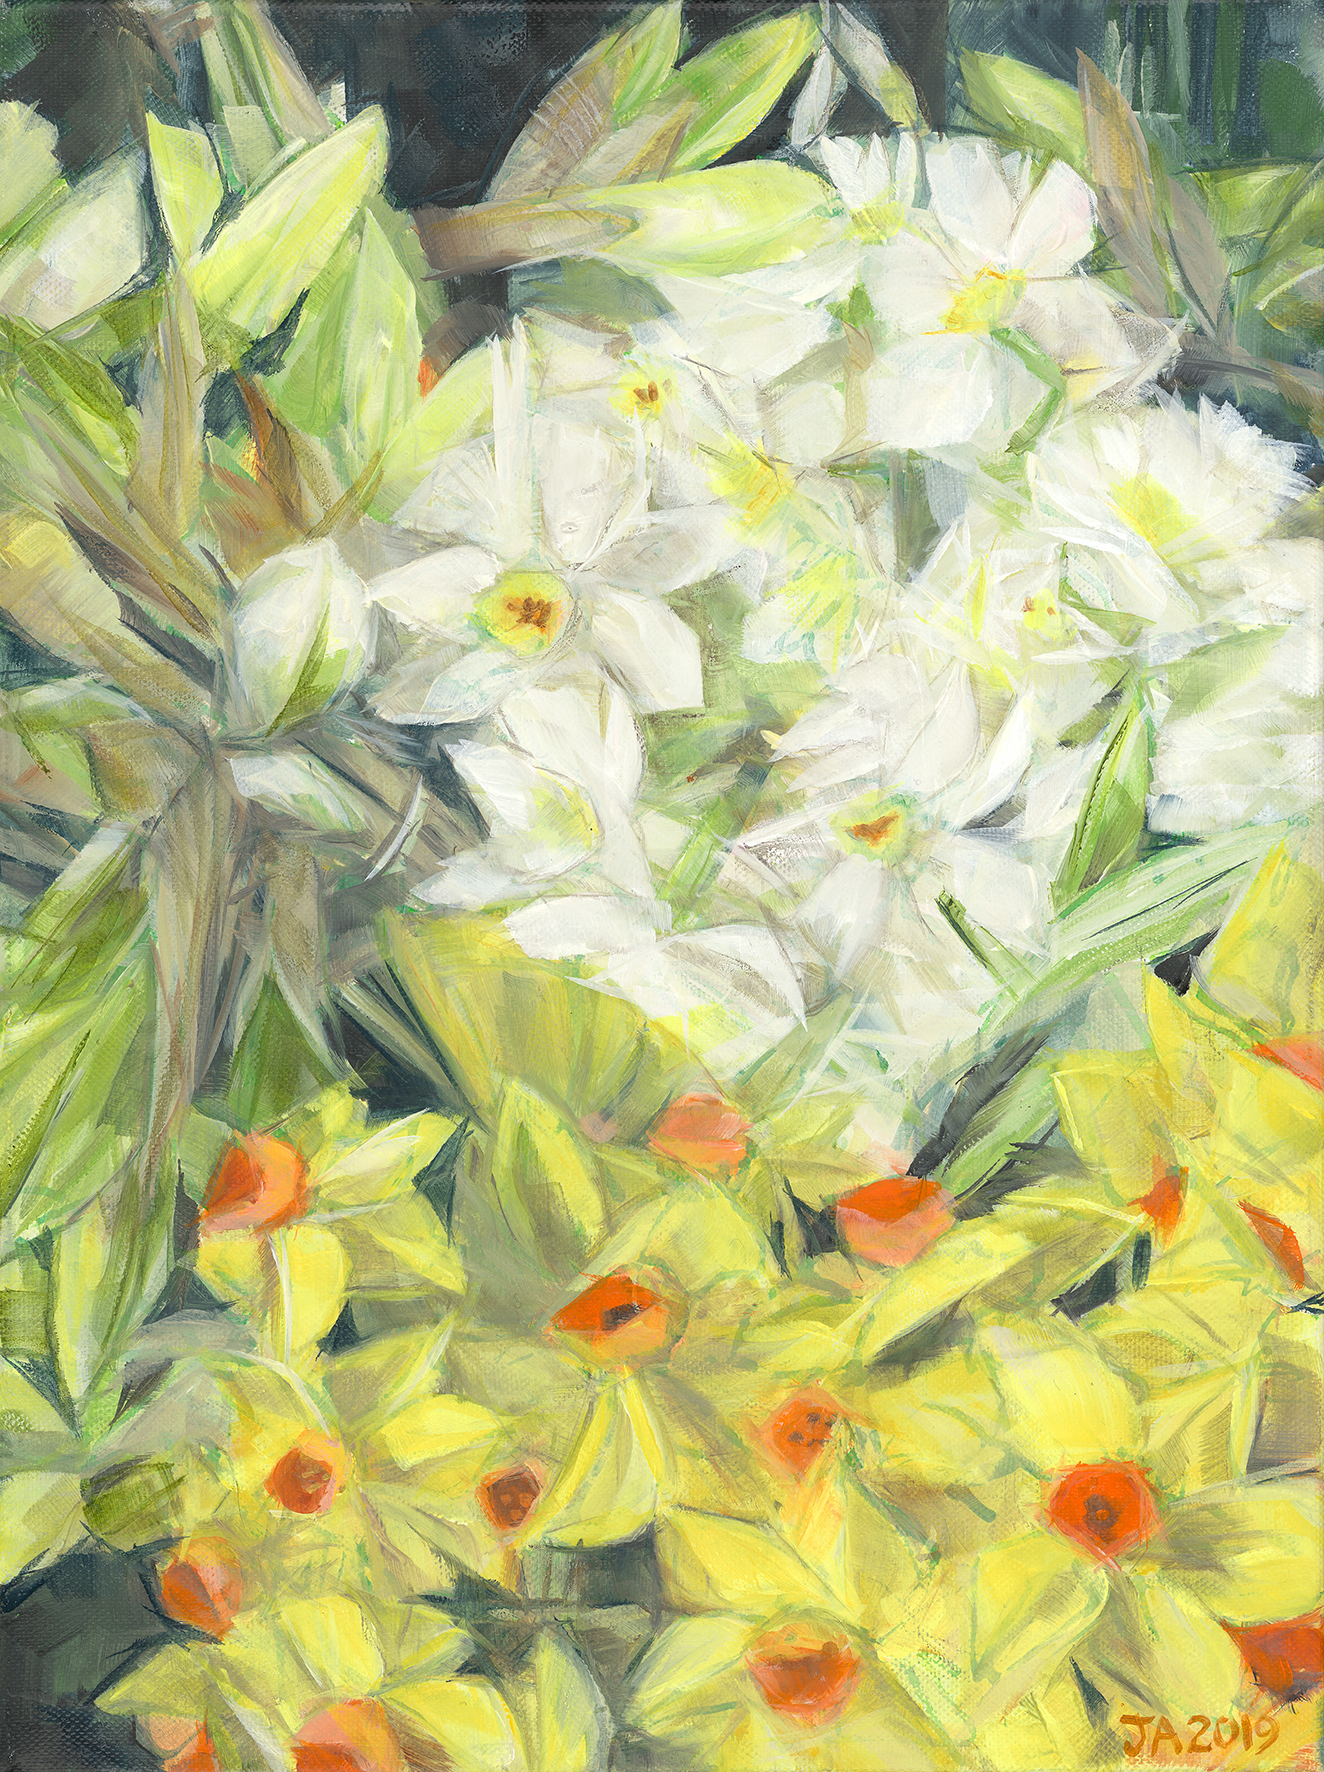 Daffodils as an A3 Giclee print